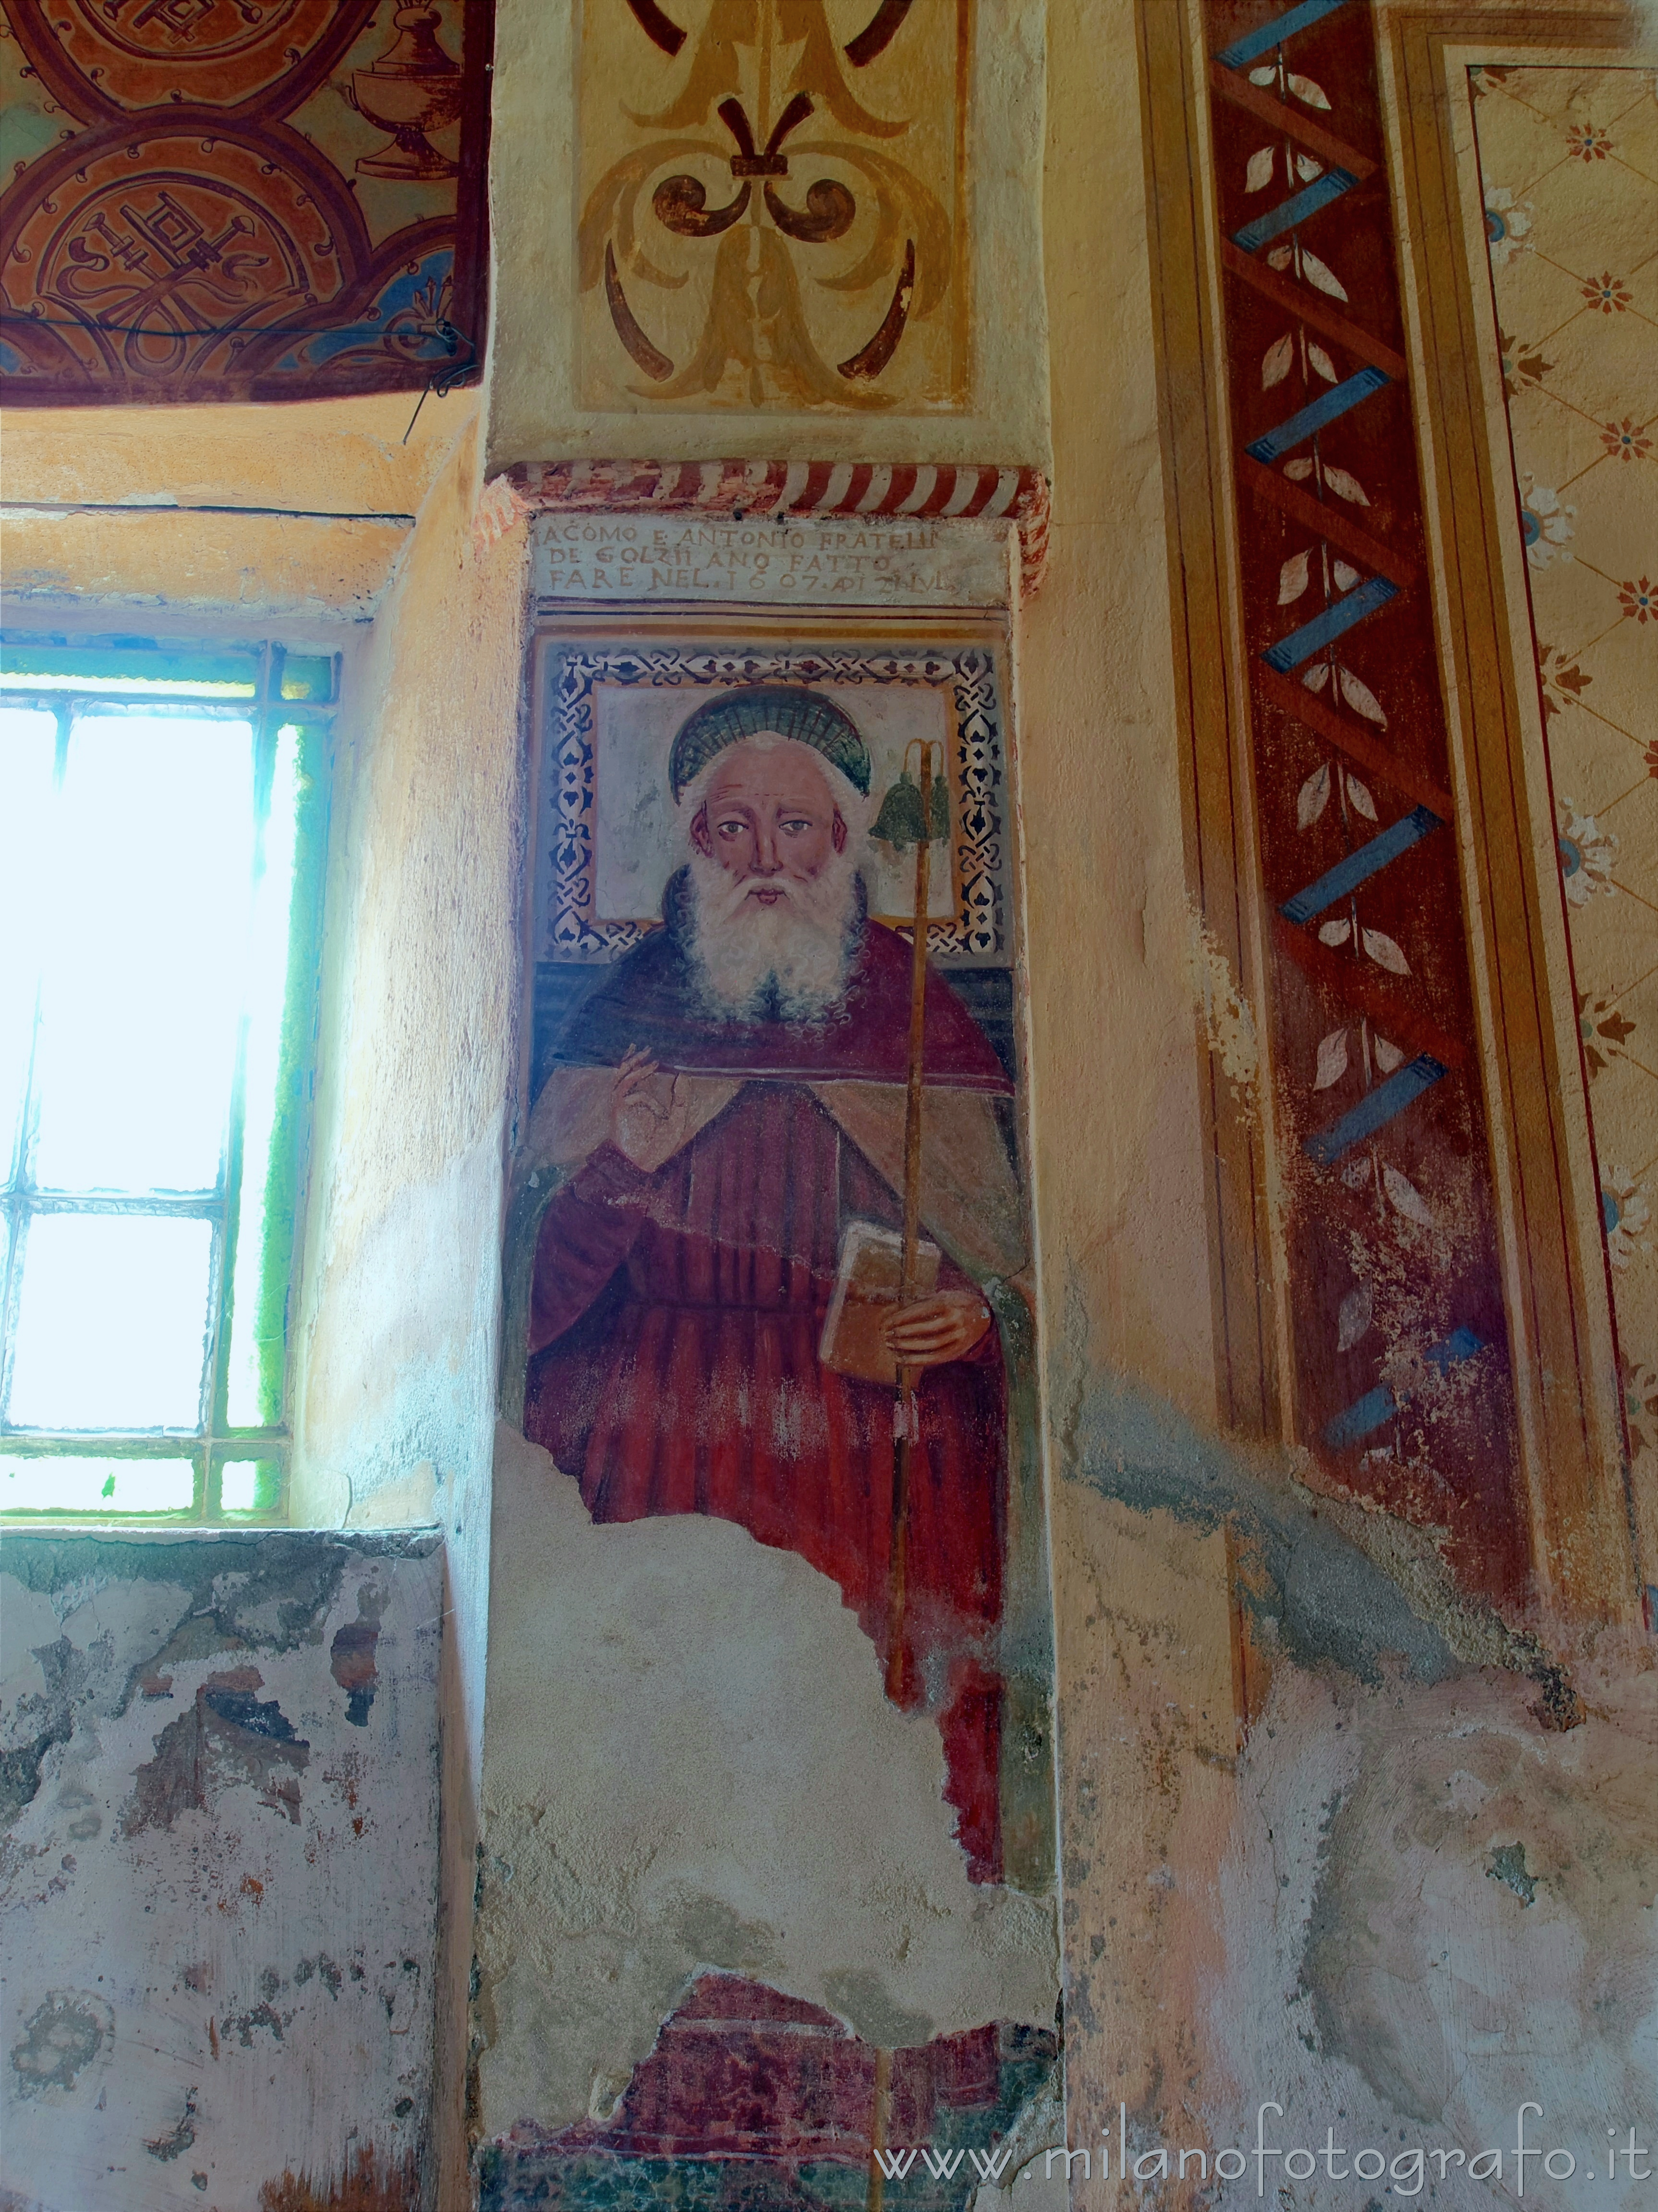 Andorno Micca (Biella, Italy): Fresco of St. Anthony the Abbot in the Chapel of the Hermit - Andorno Micca (Biella, Italy)